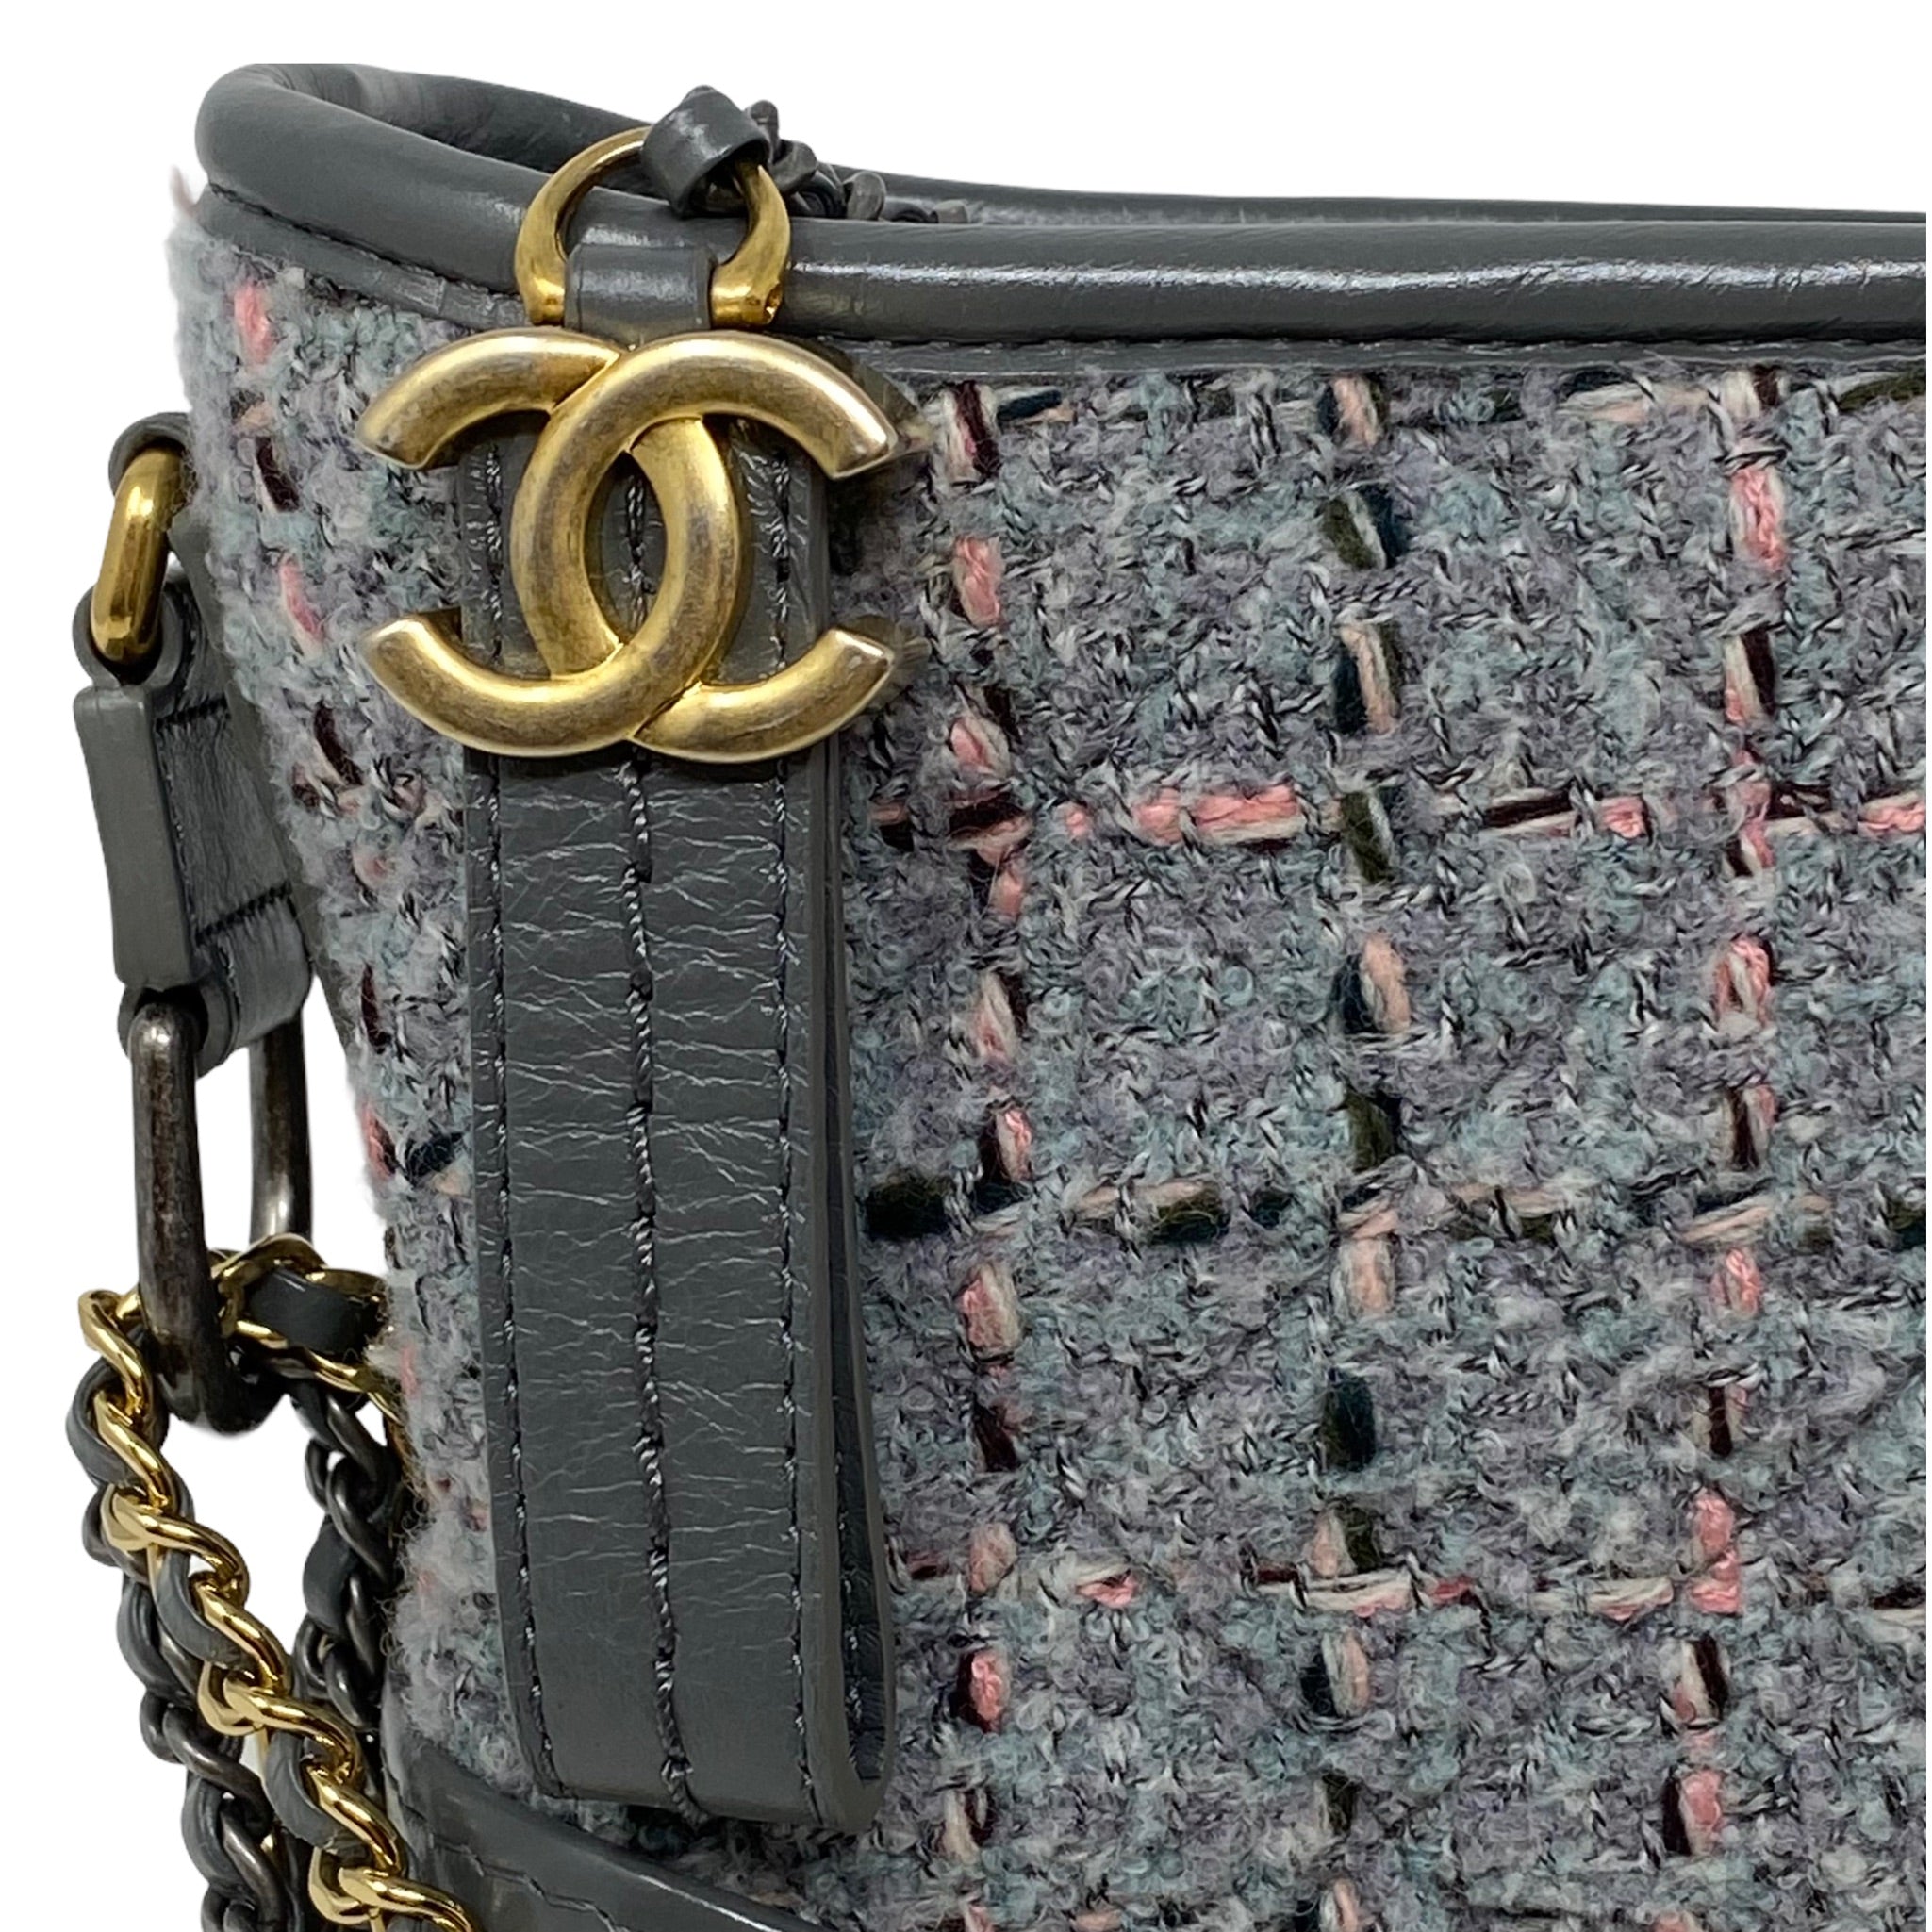 Chanel Gray Tweed Small Gabrielle Hobo Bag